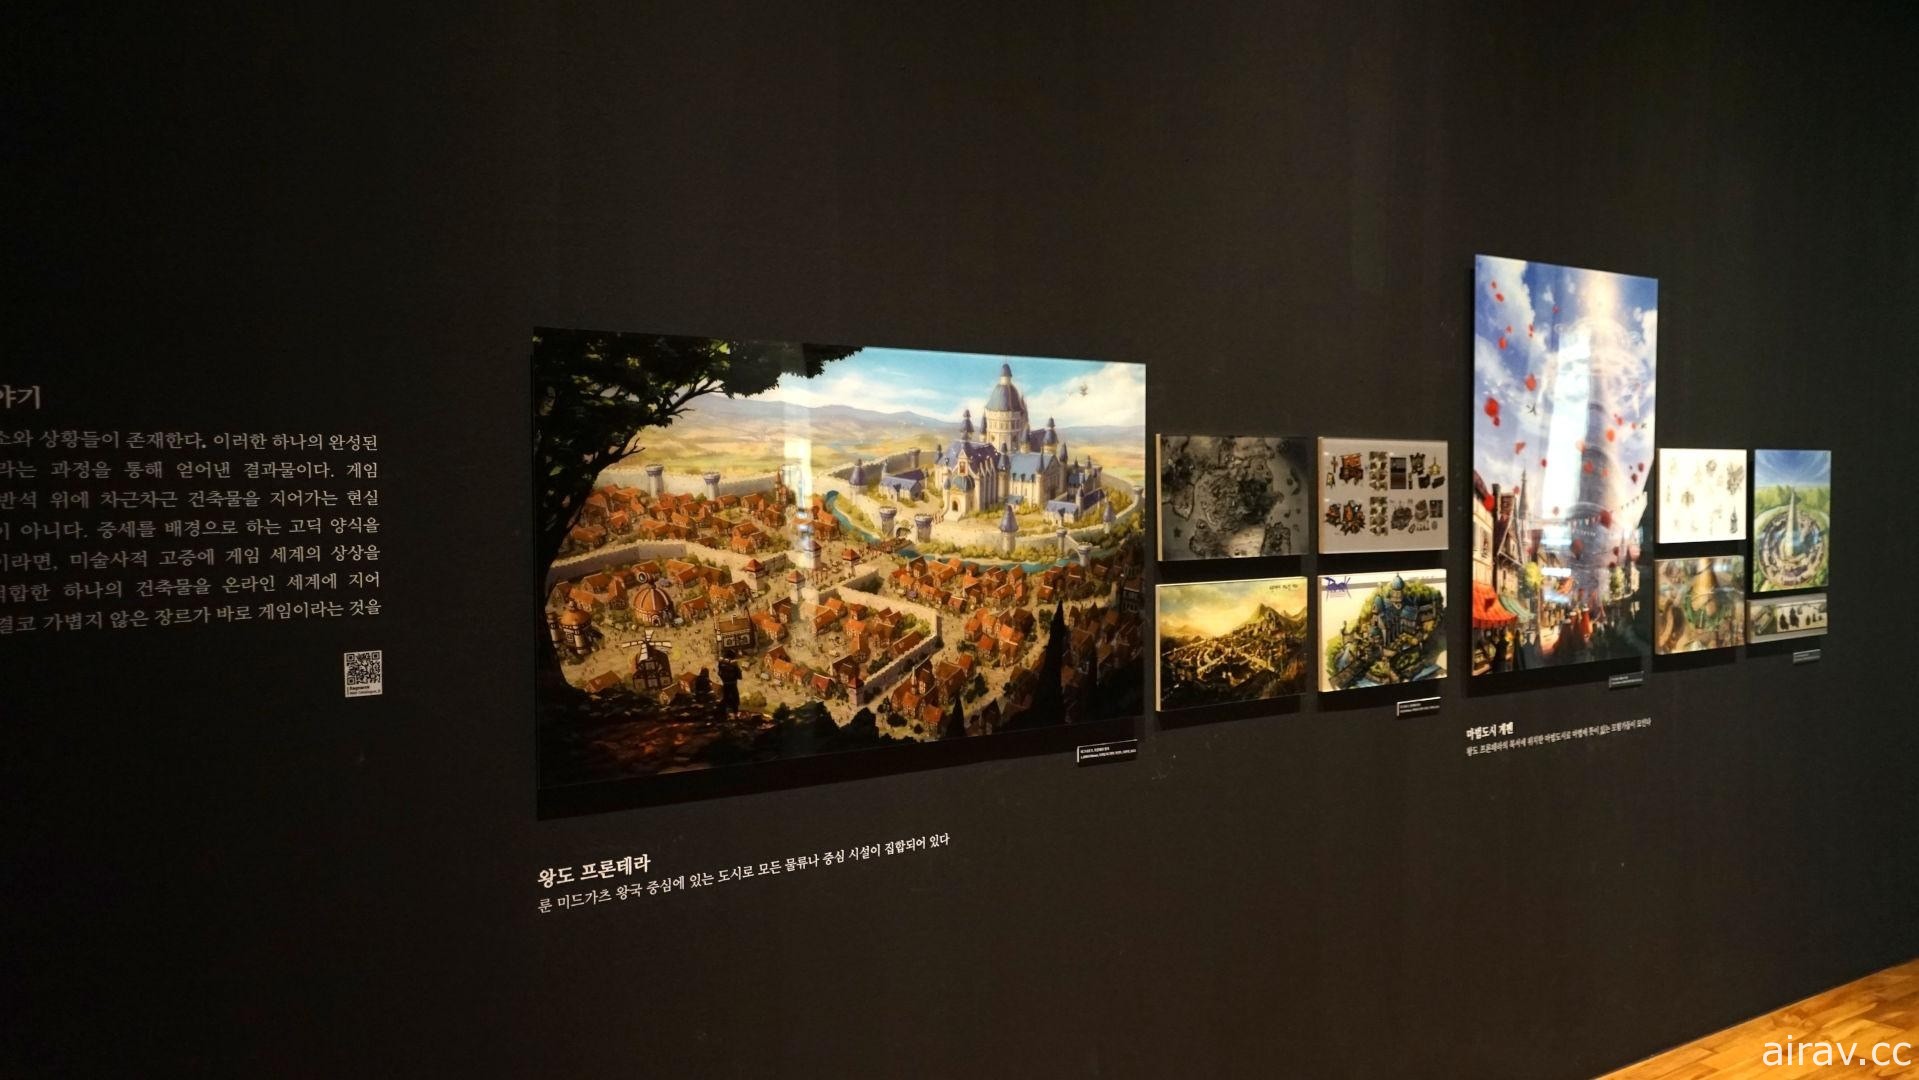 【G★2021】《RO 仙境傳說》韓版將屆滿 20 週年 營運團隊舉辦美術特展「幻想的旅途」